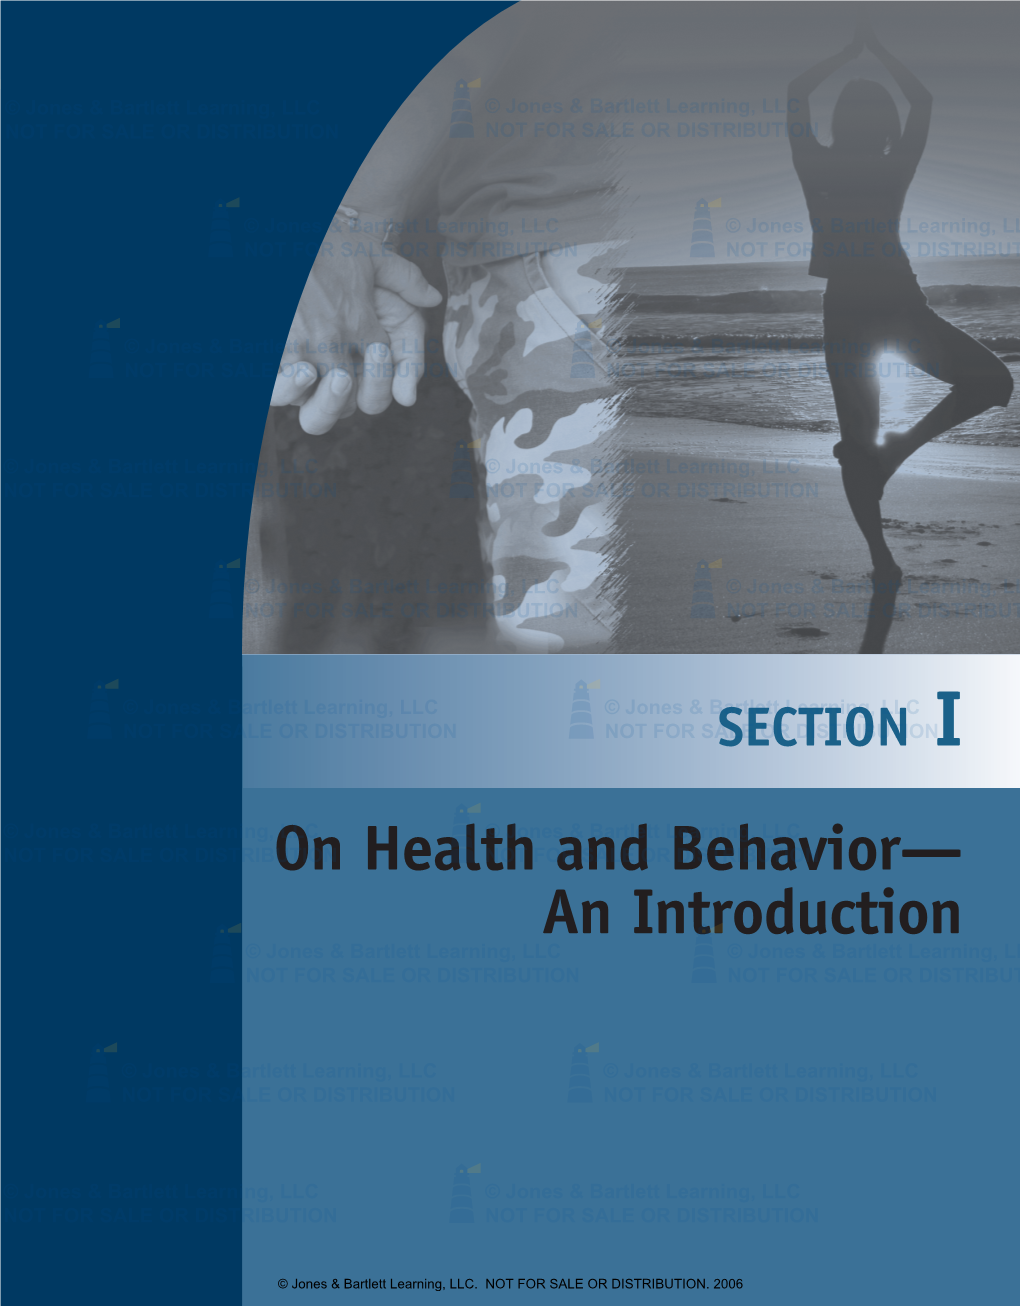 On Health and Behavior